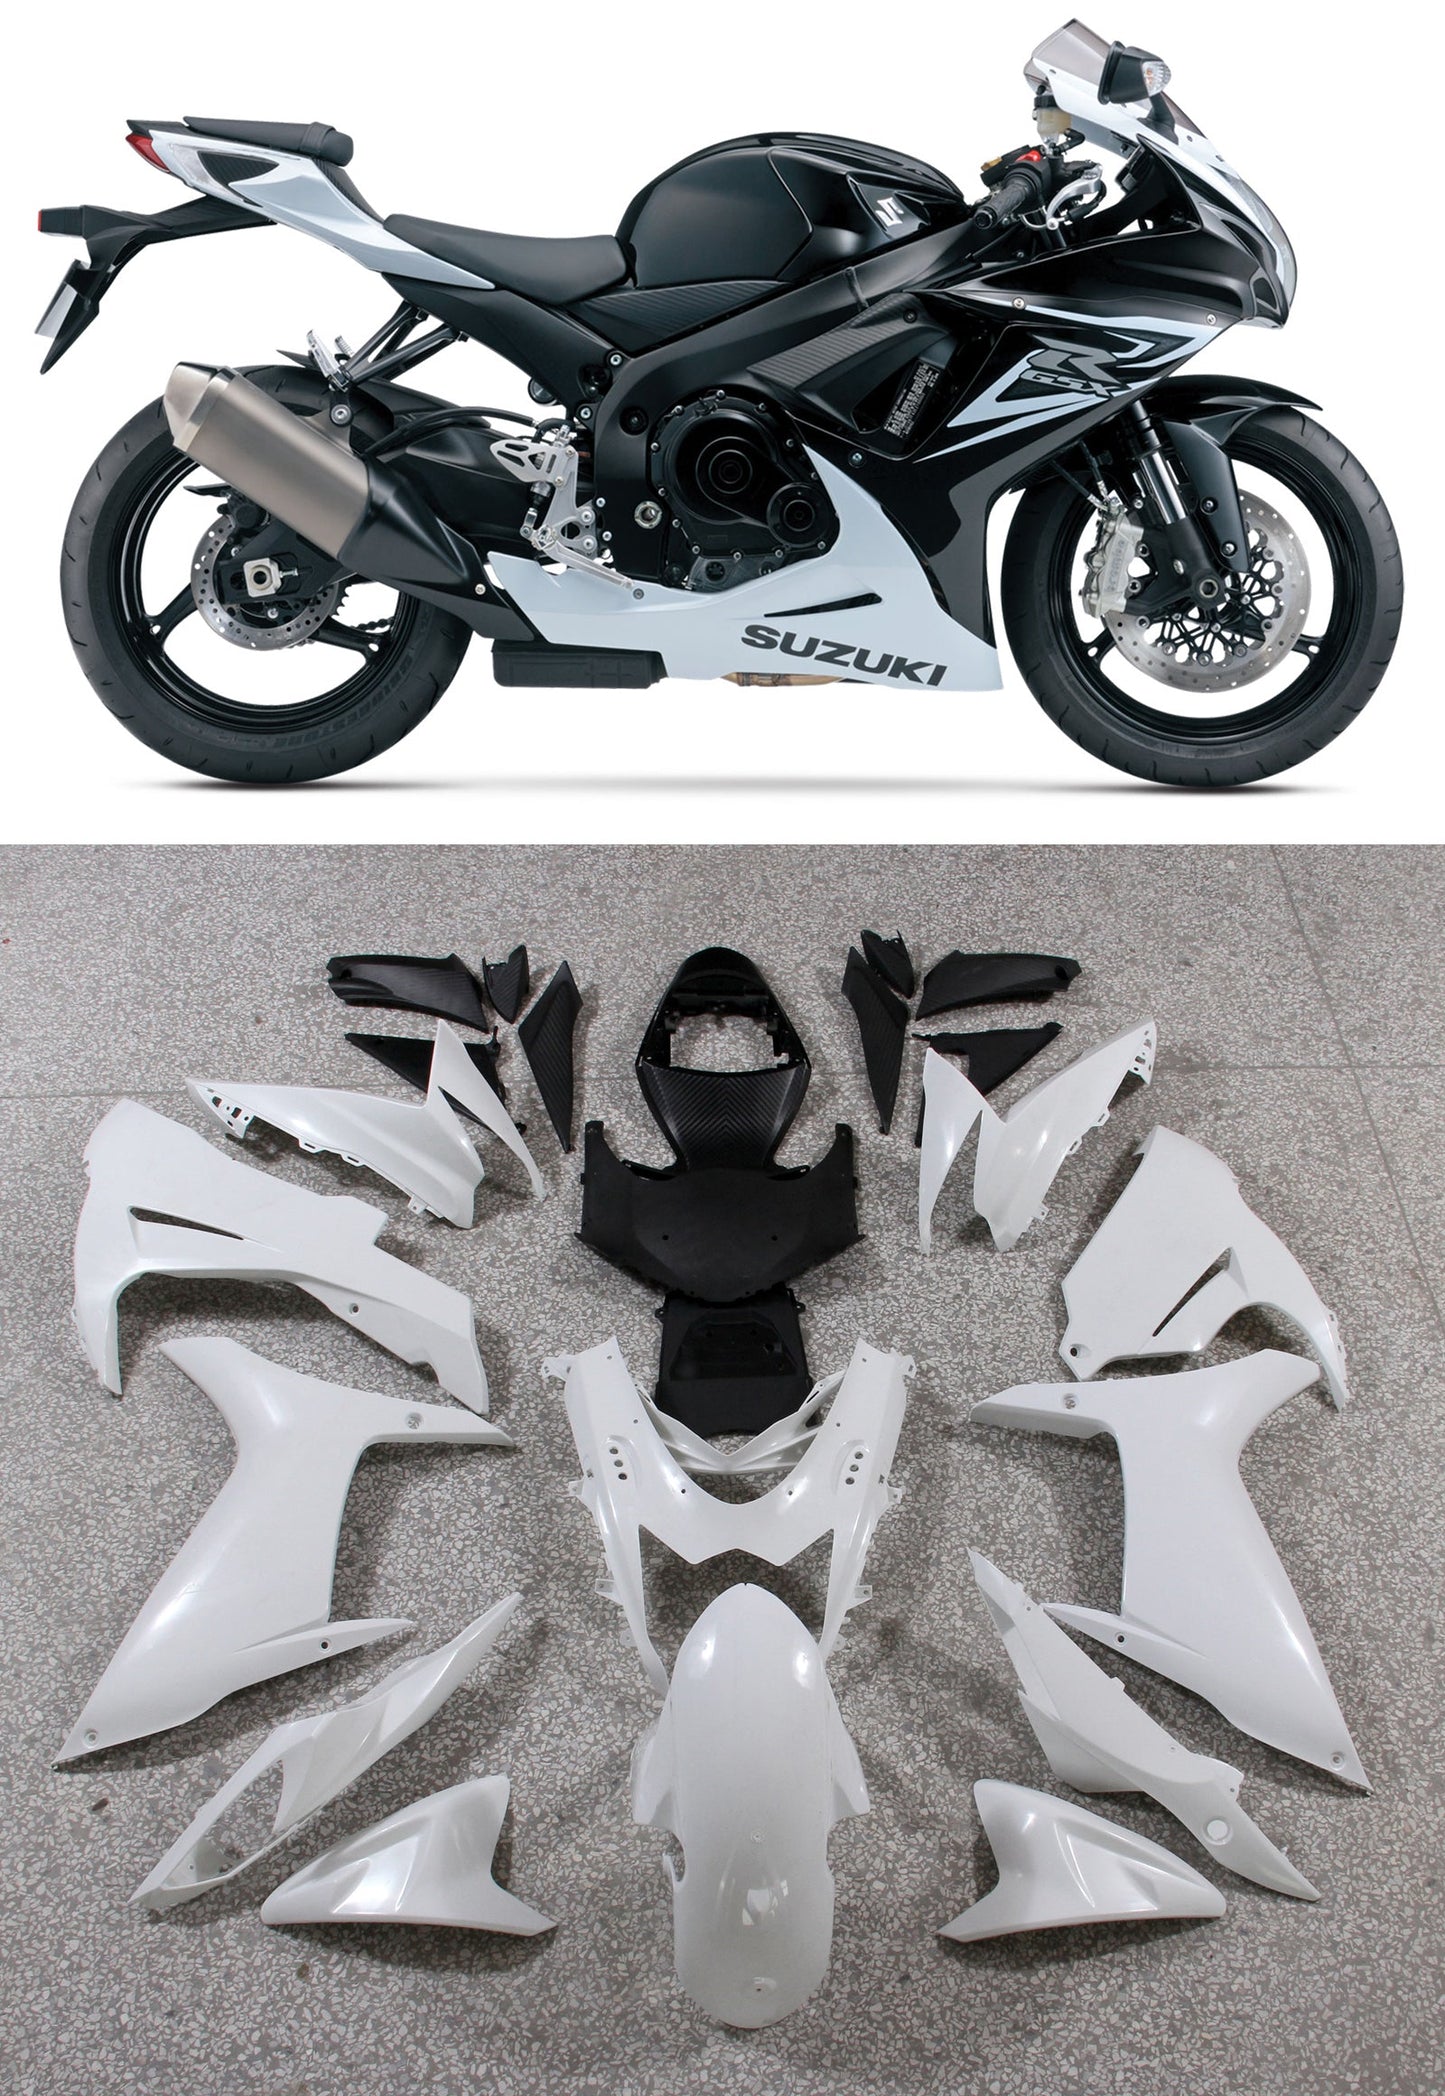 Generic Fit For Suzuki GSXR 600/750 (2011-2014) K11 Bodywork Fairing ABS Injection Molded Set 17 Style